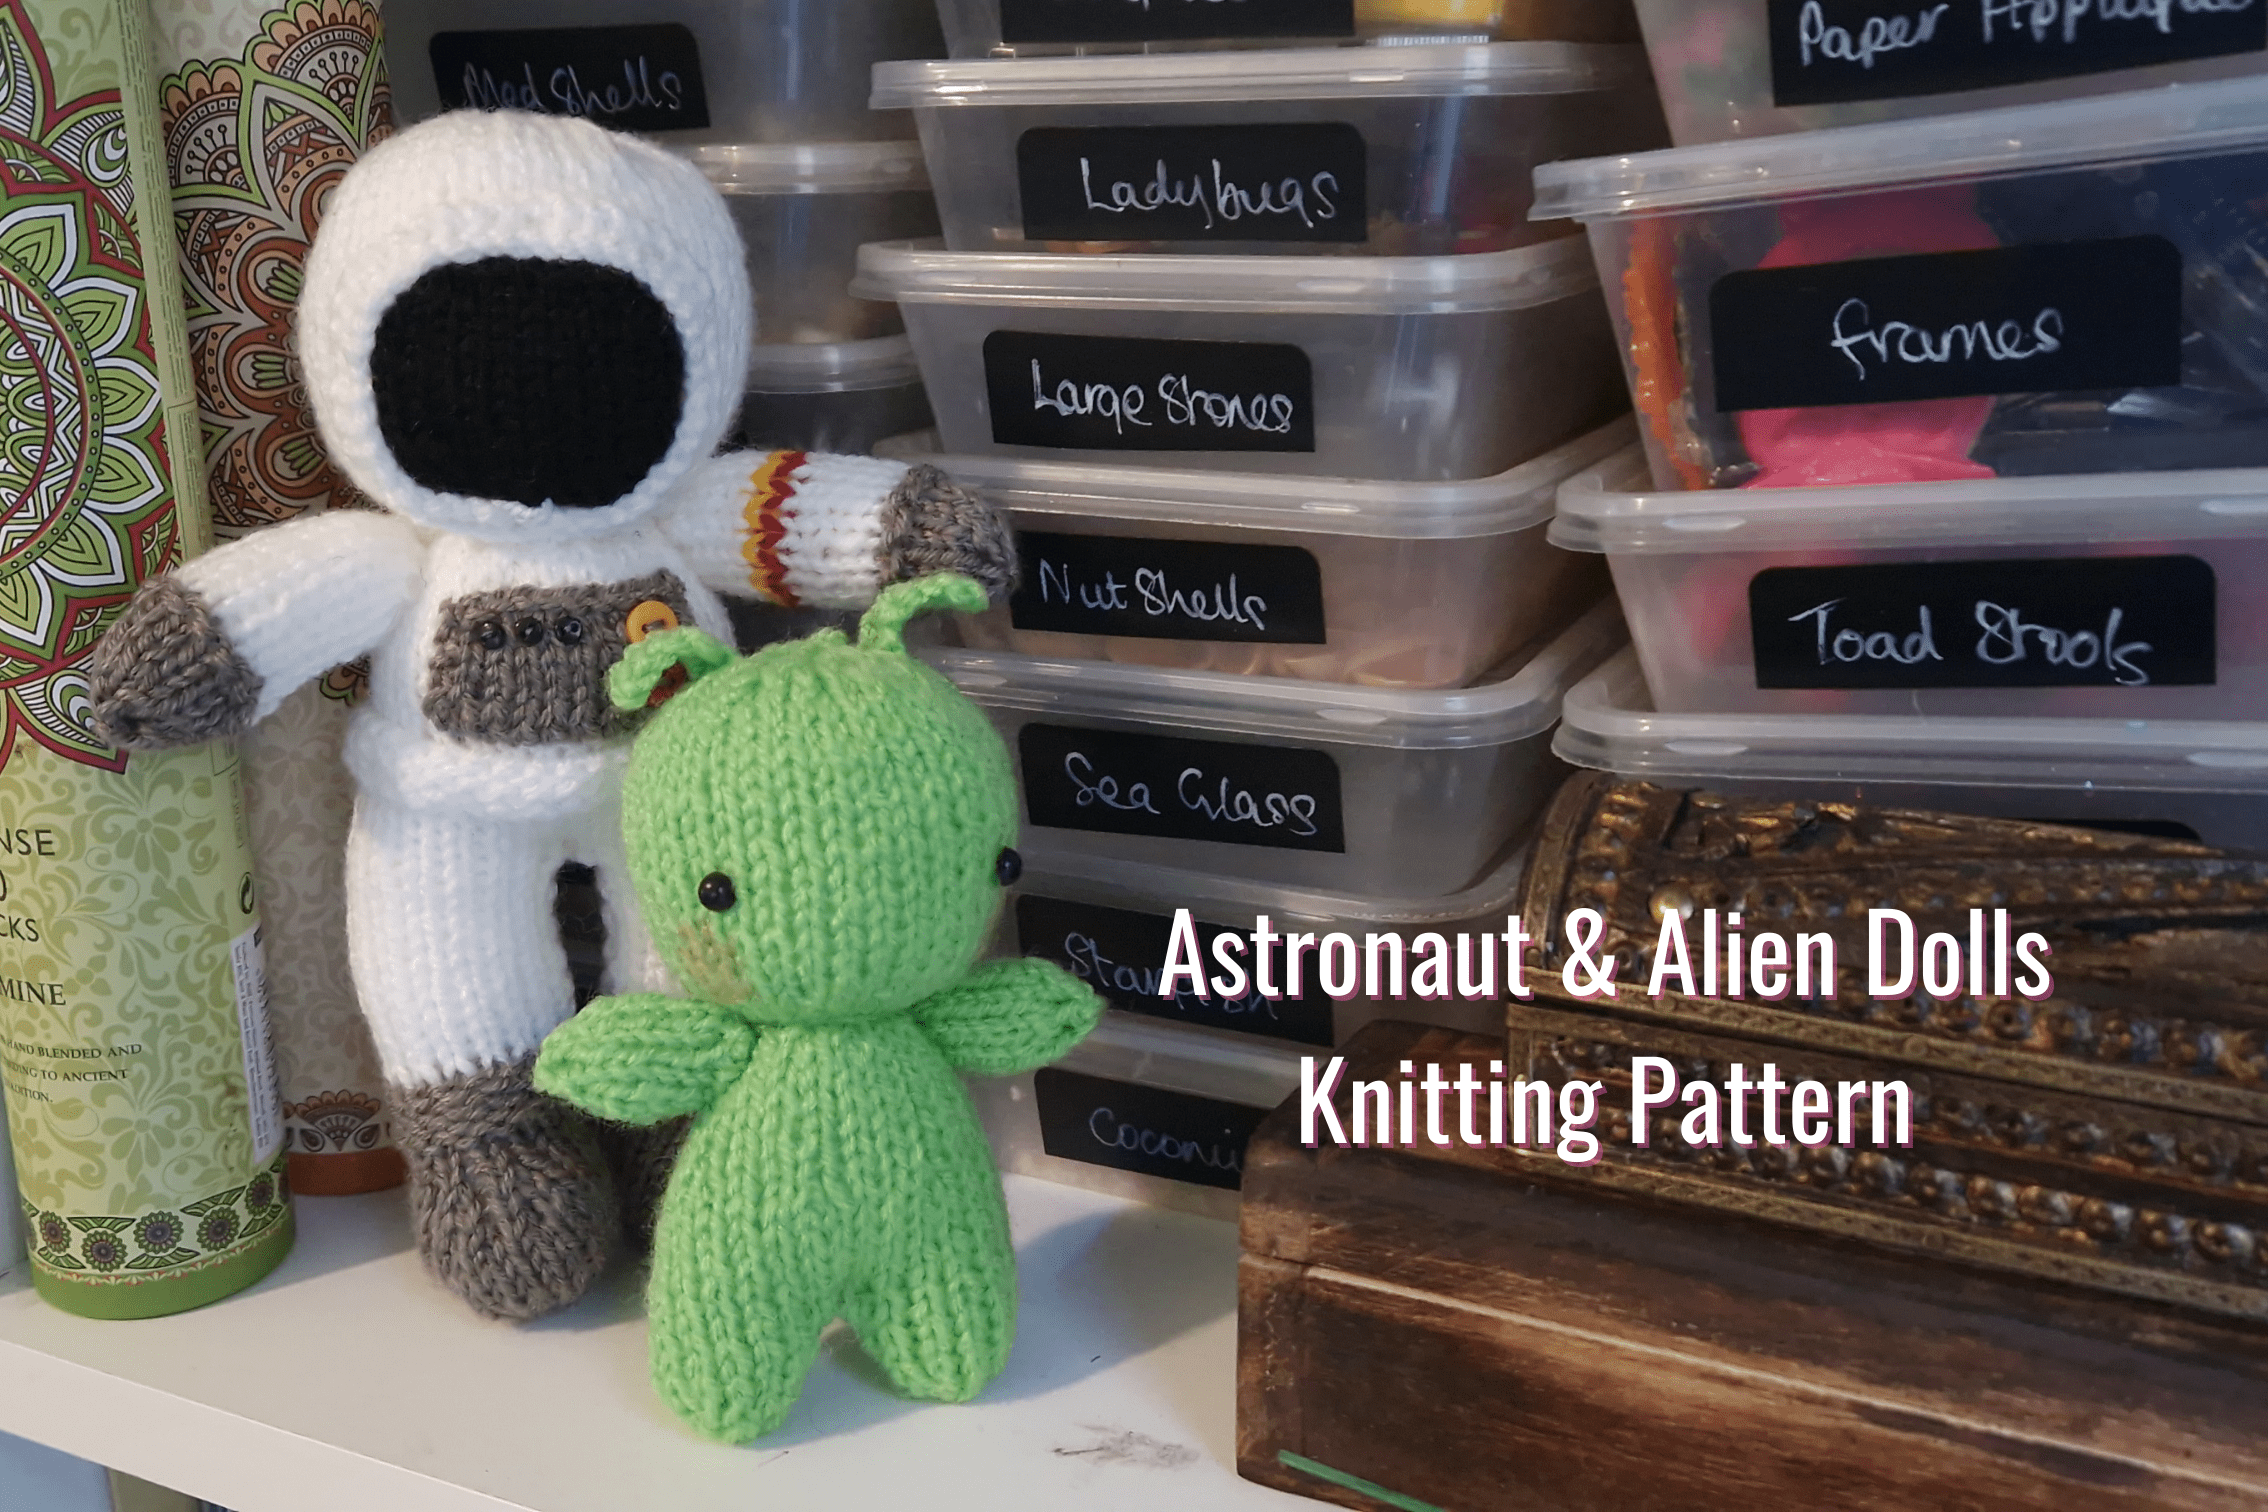 Astronaut & Alien Dolls Knitting Pattern (Knitting Patterns)